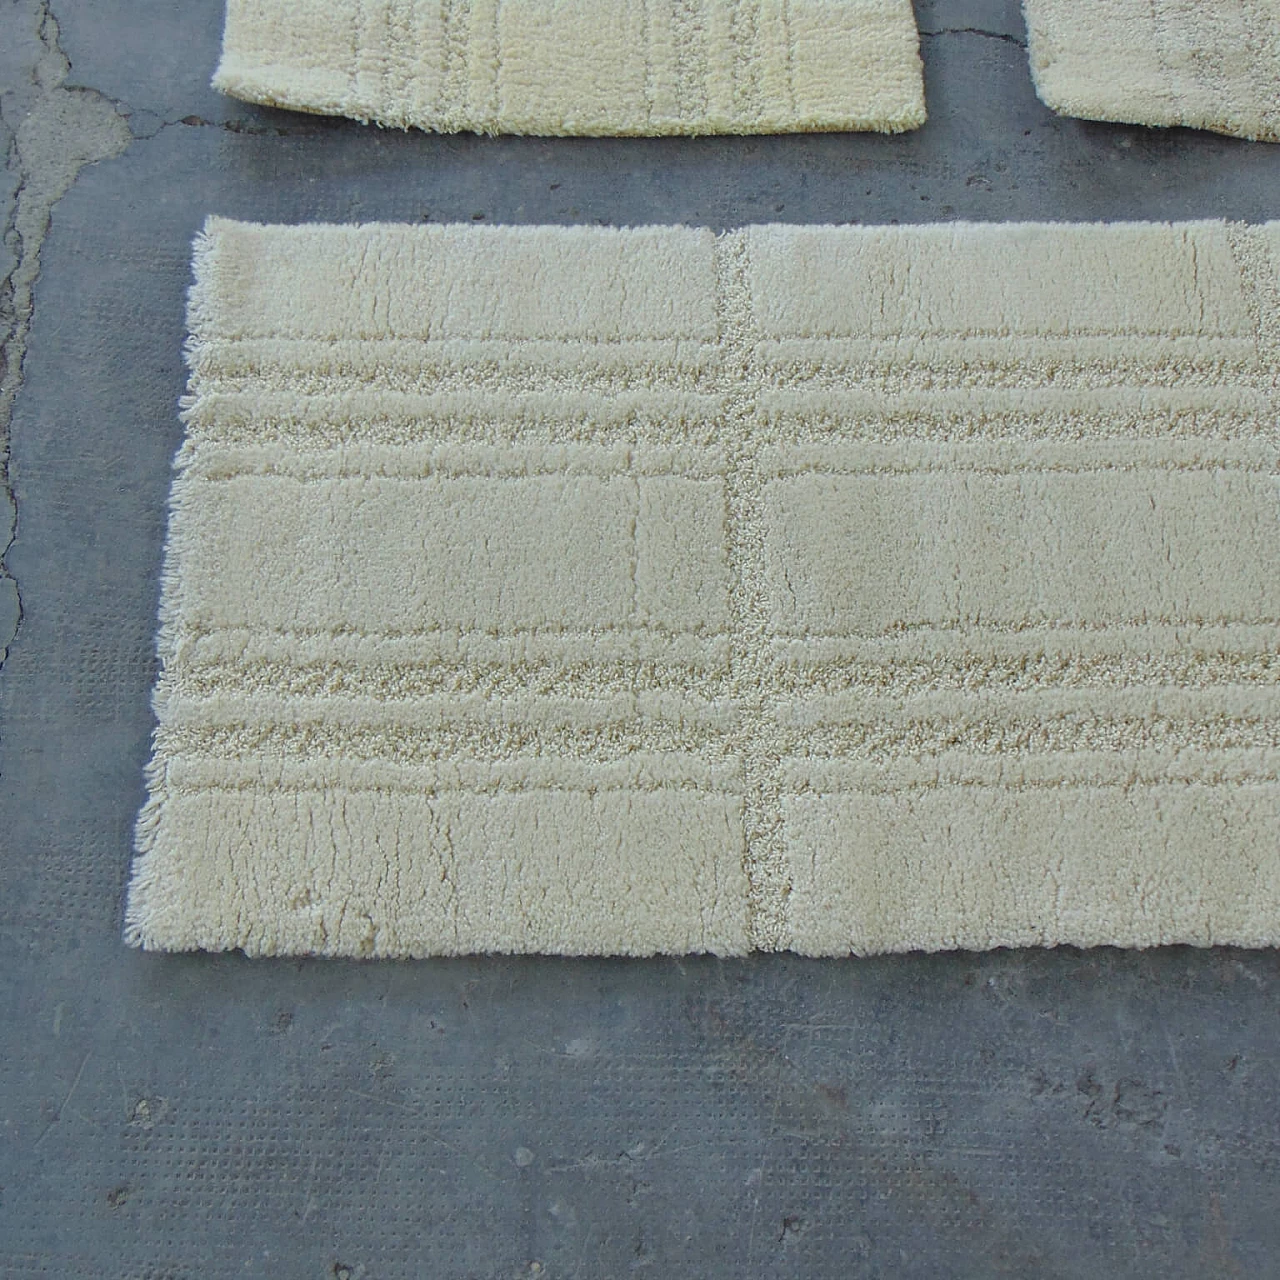 3 Tappeti danesi in pura lana vergine, tonalità crema, Eksport Hojer, anni '70 1069212